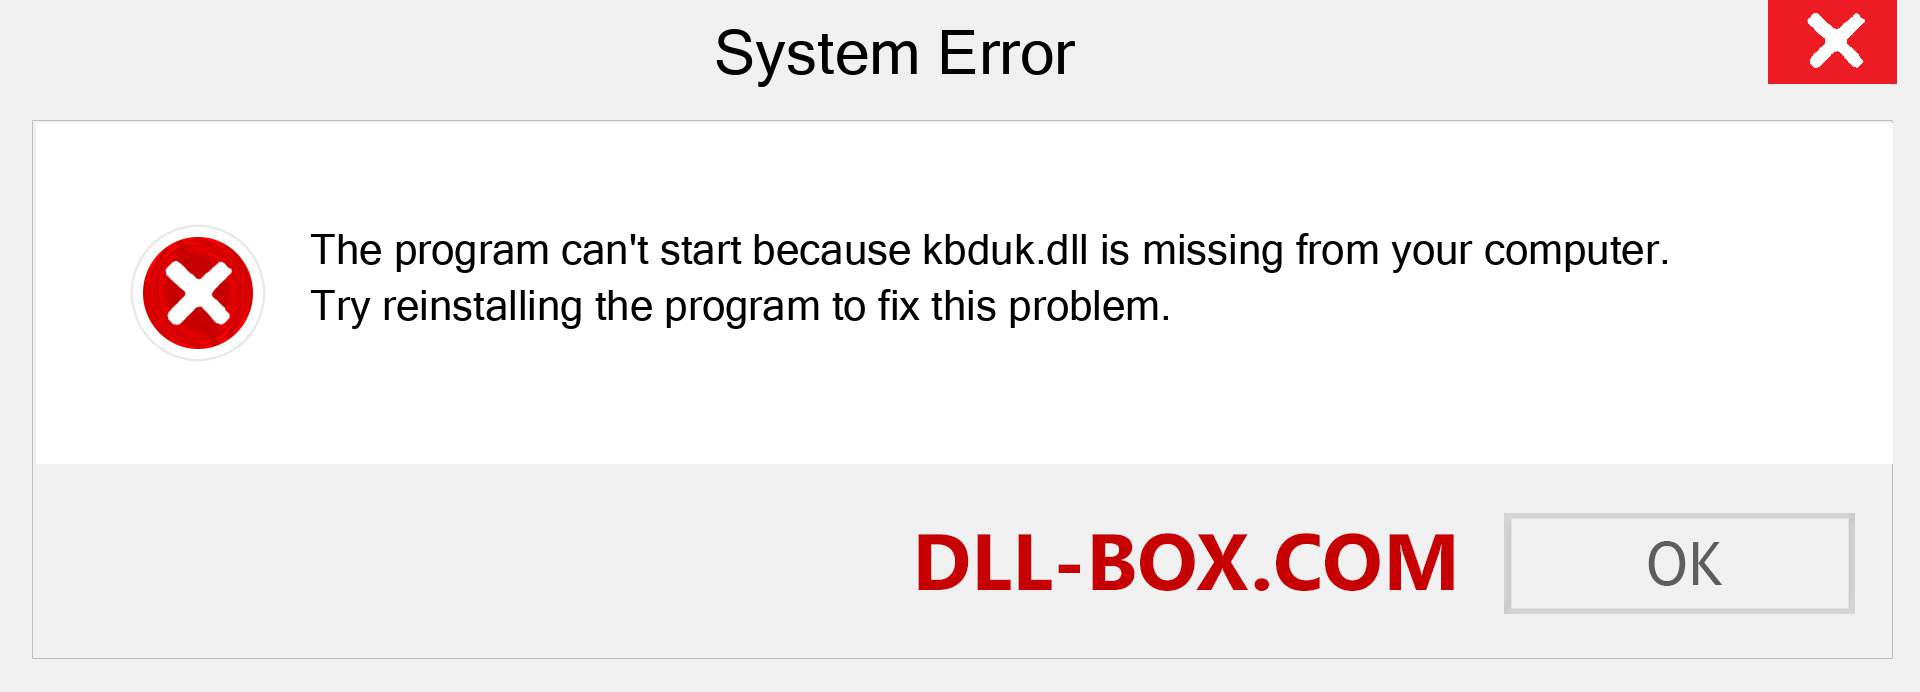  kbduk.dll file is missing?. Download for Windows 7, 8, 10 - Fix  kbduk dll Missing Error on Windows, photos, images